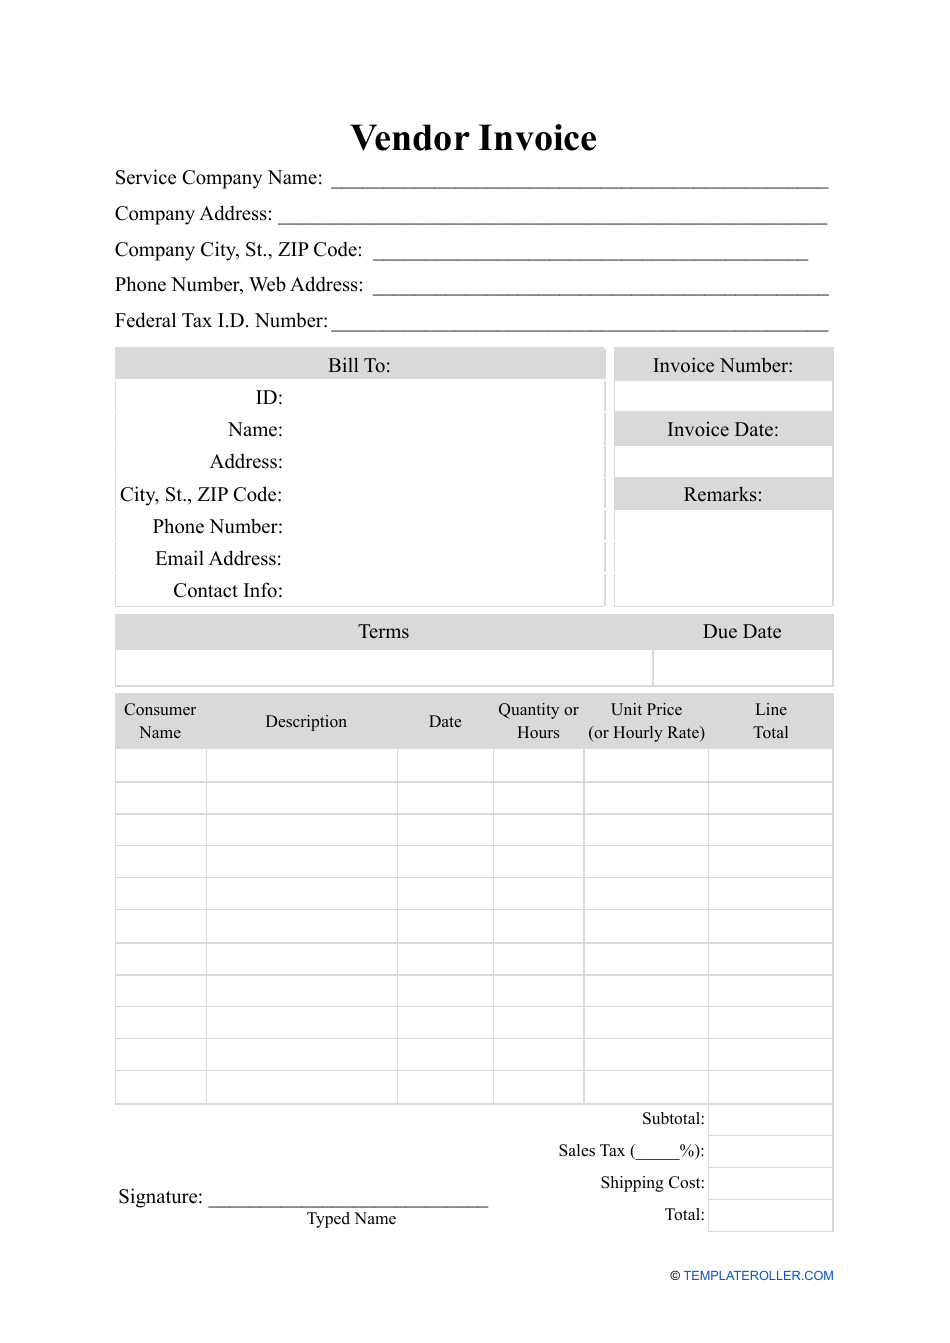 vendor invoice template download printable pdf templateroller